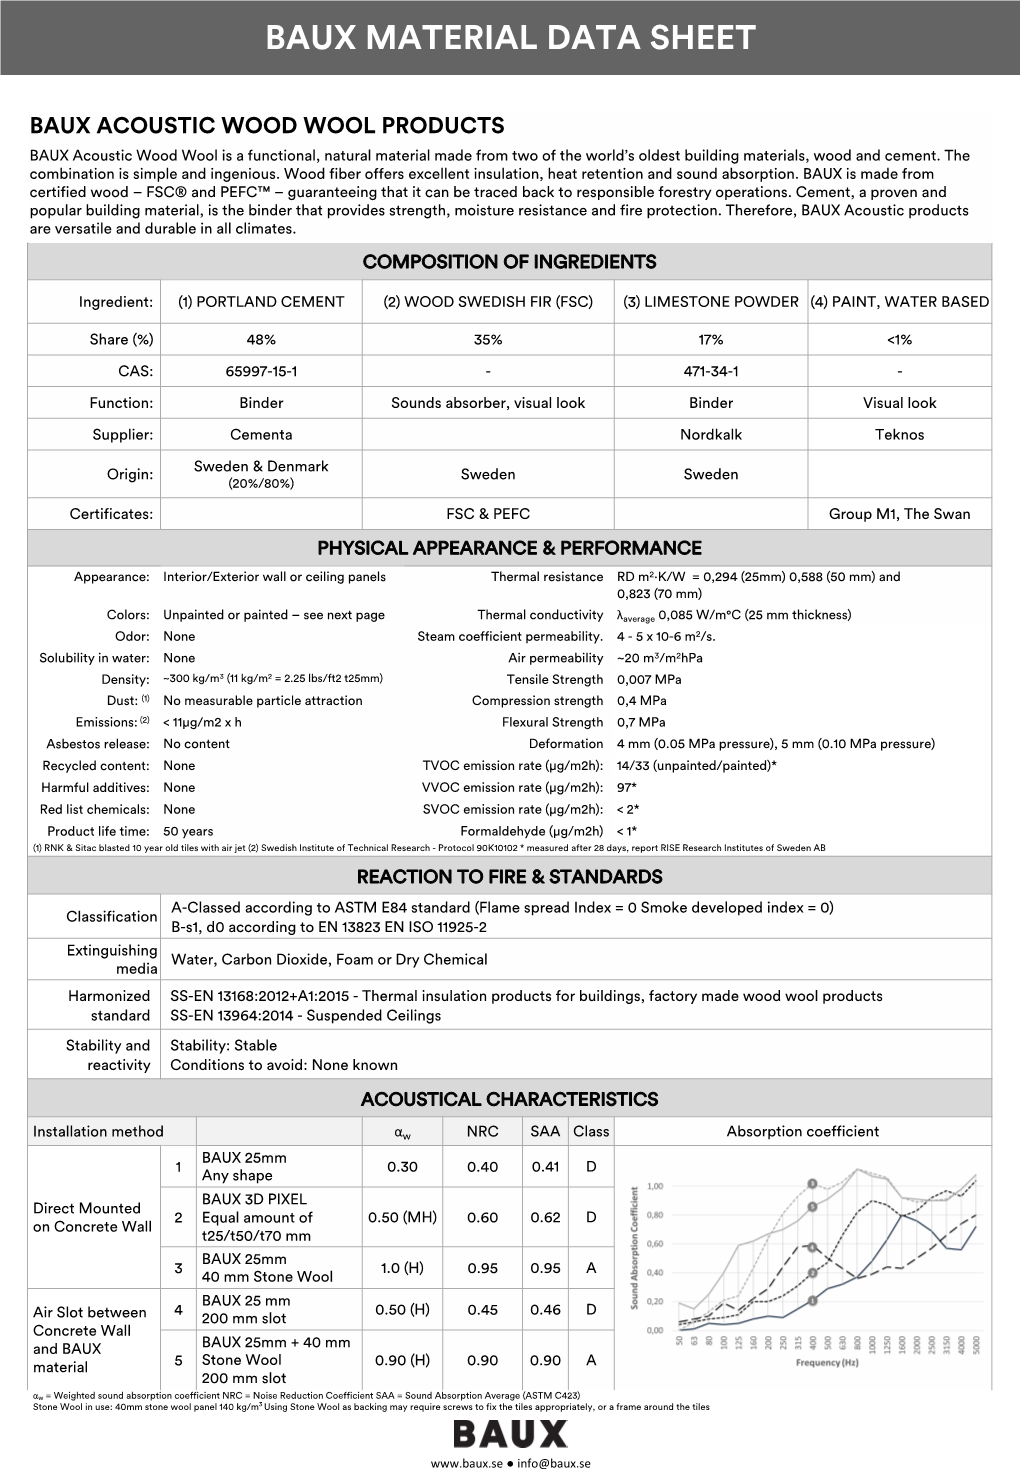 BAUX Master Material Data Sheet.Pdf